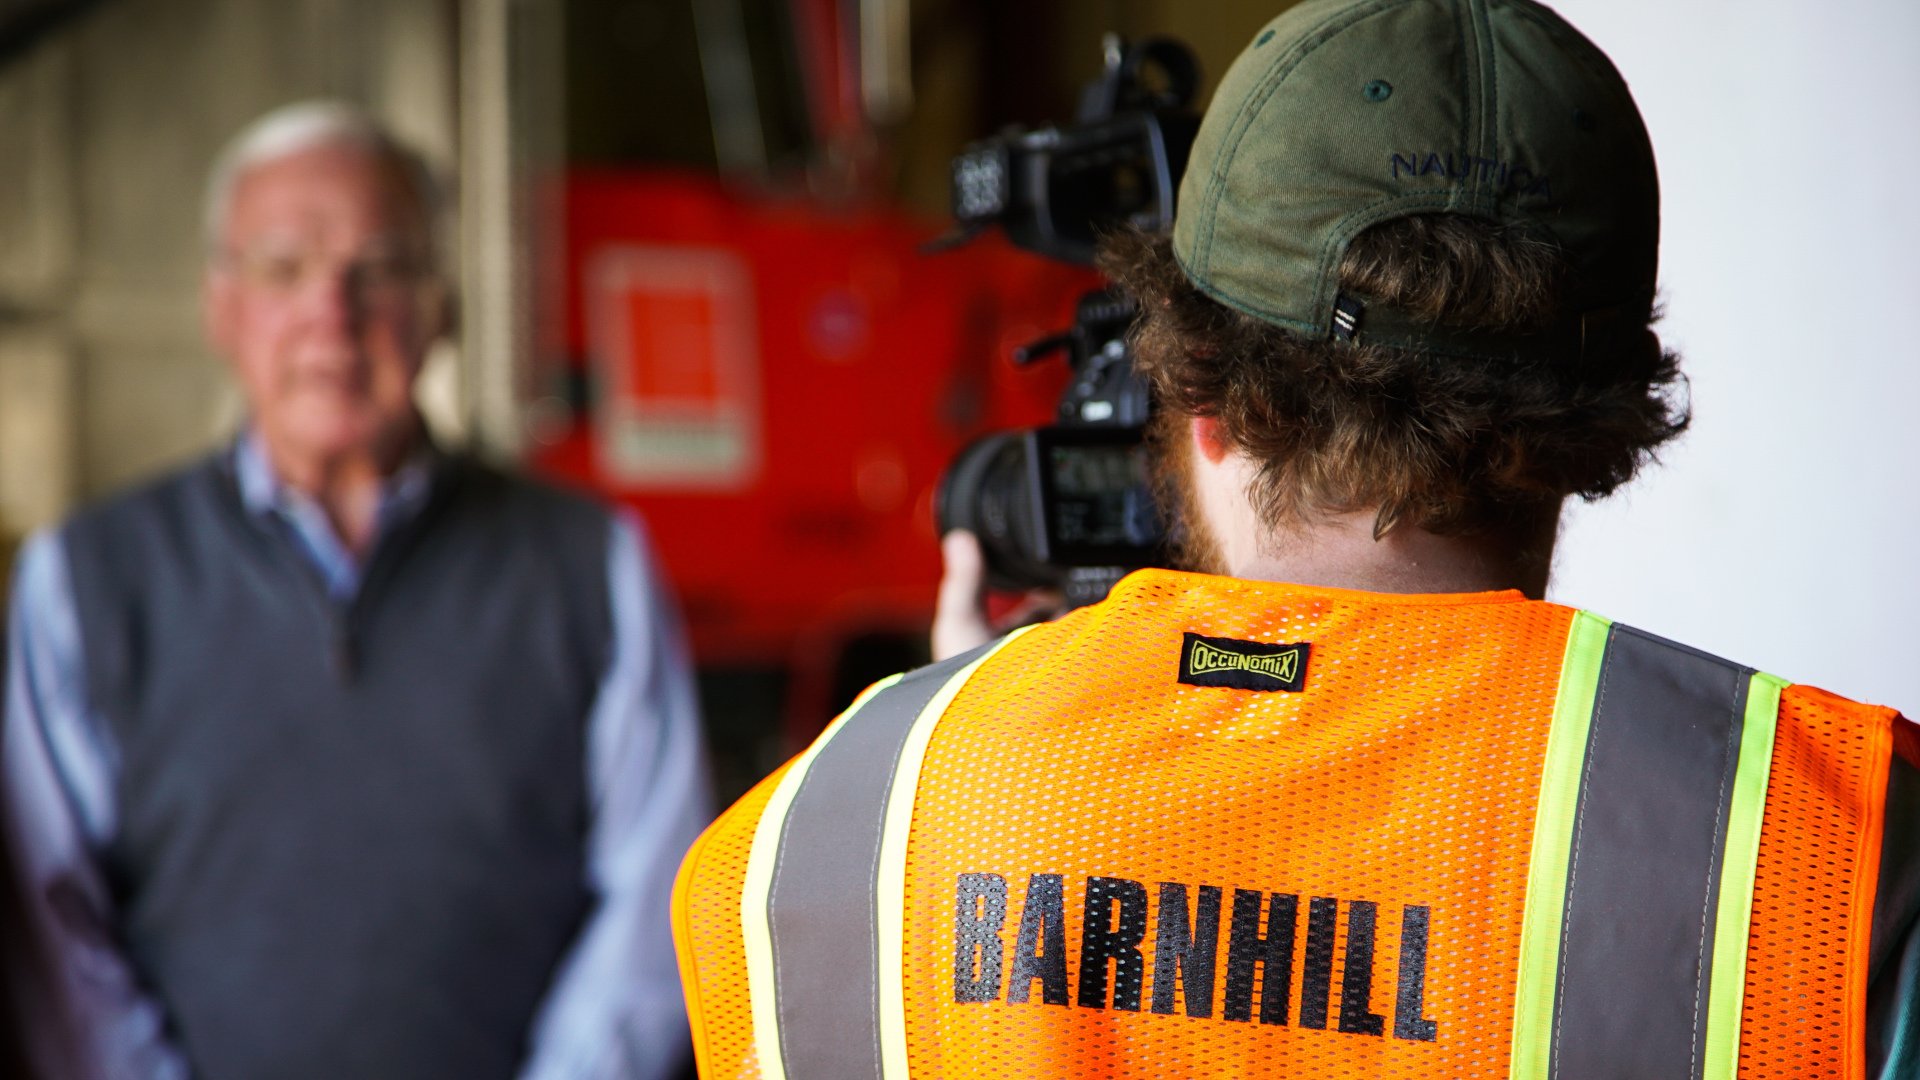 Camera operator wearing Barnhill safety vest